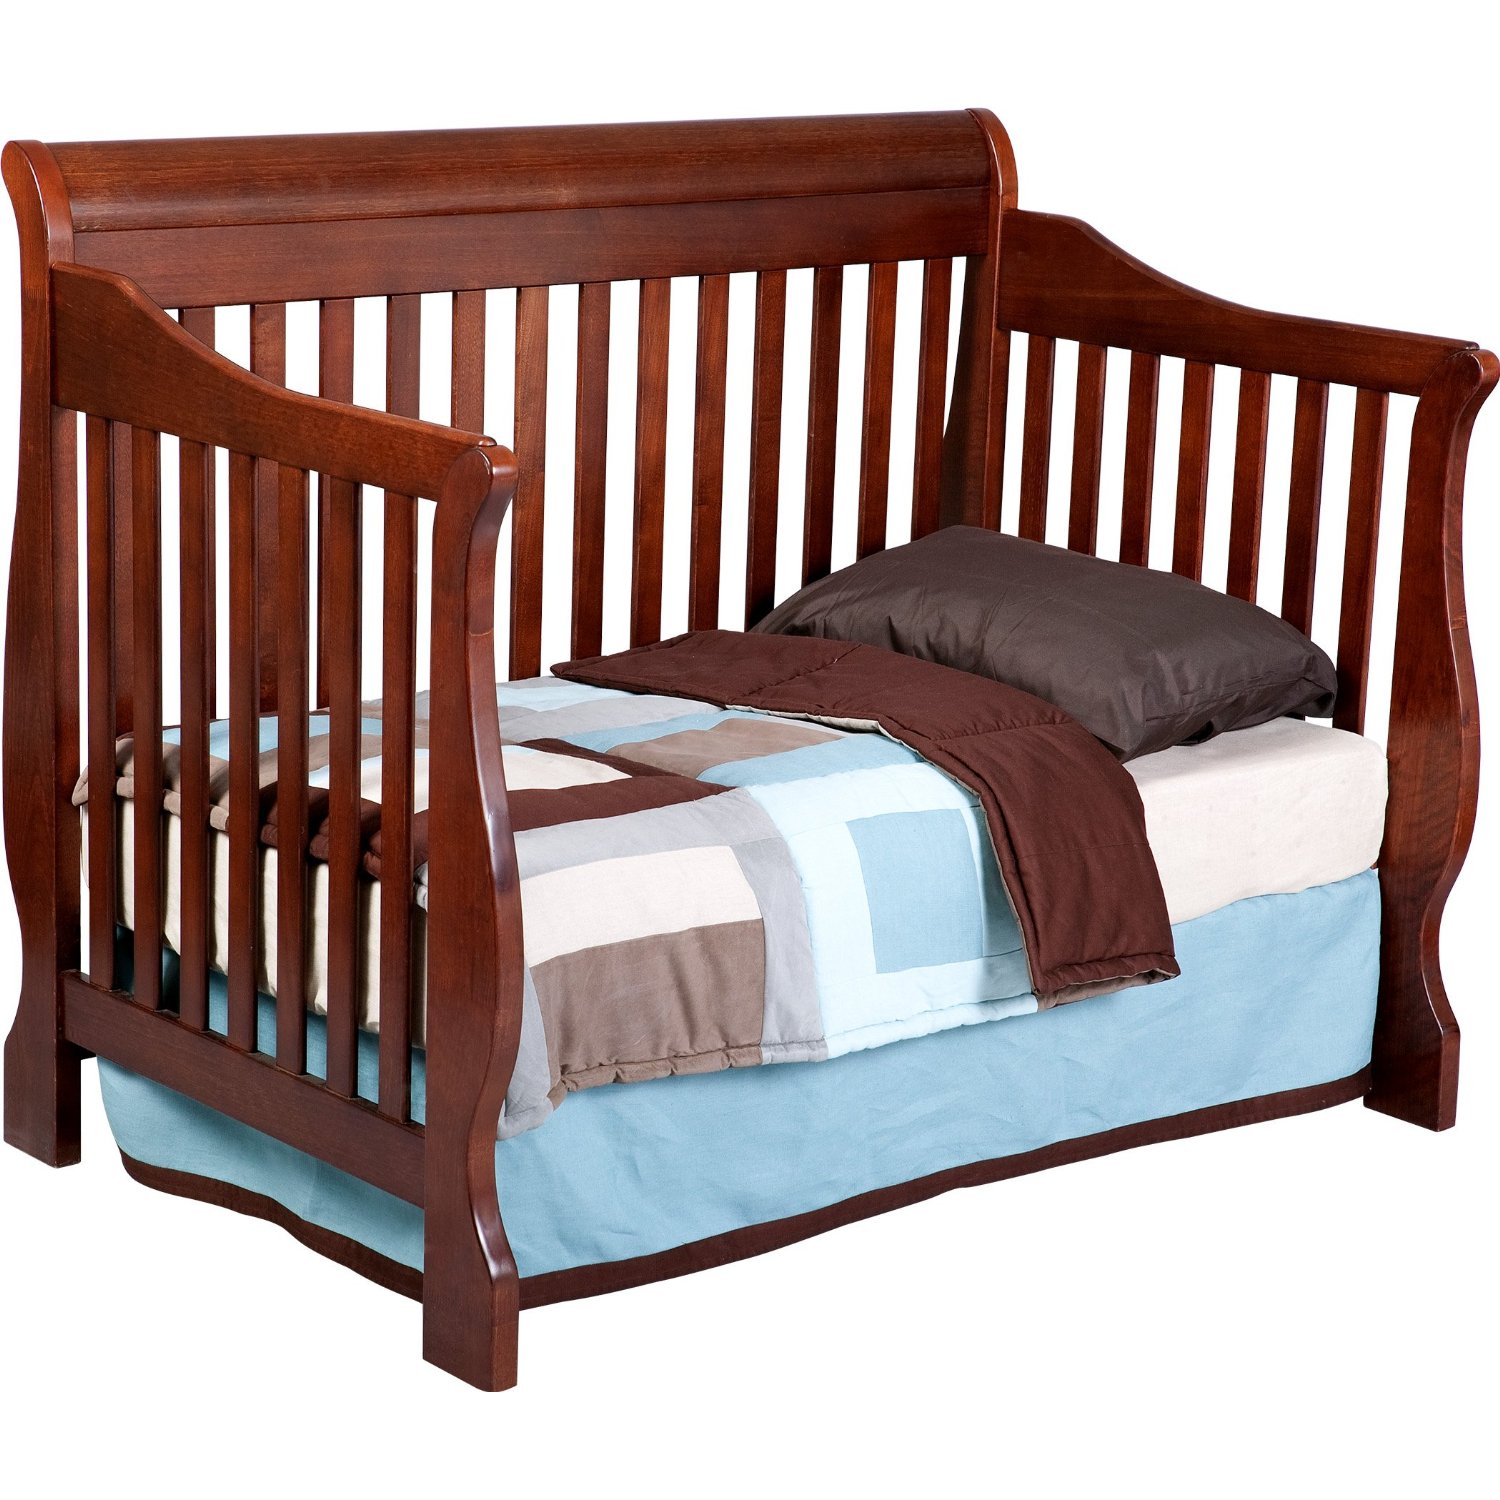 in 1 baby crib plans - Modern Baby Crib Sets